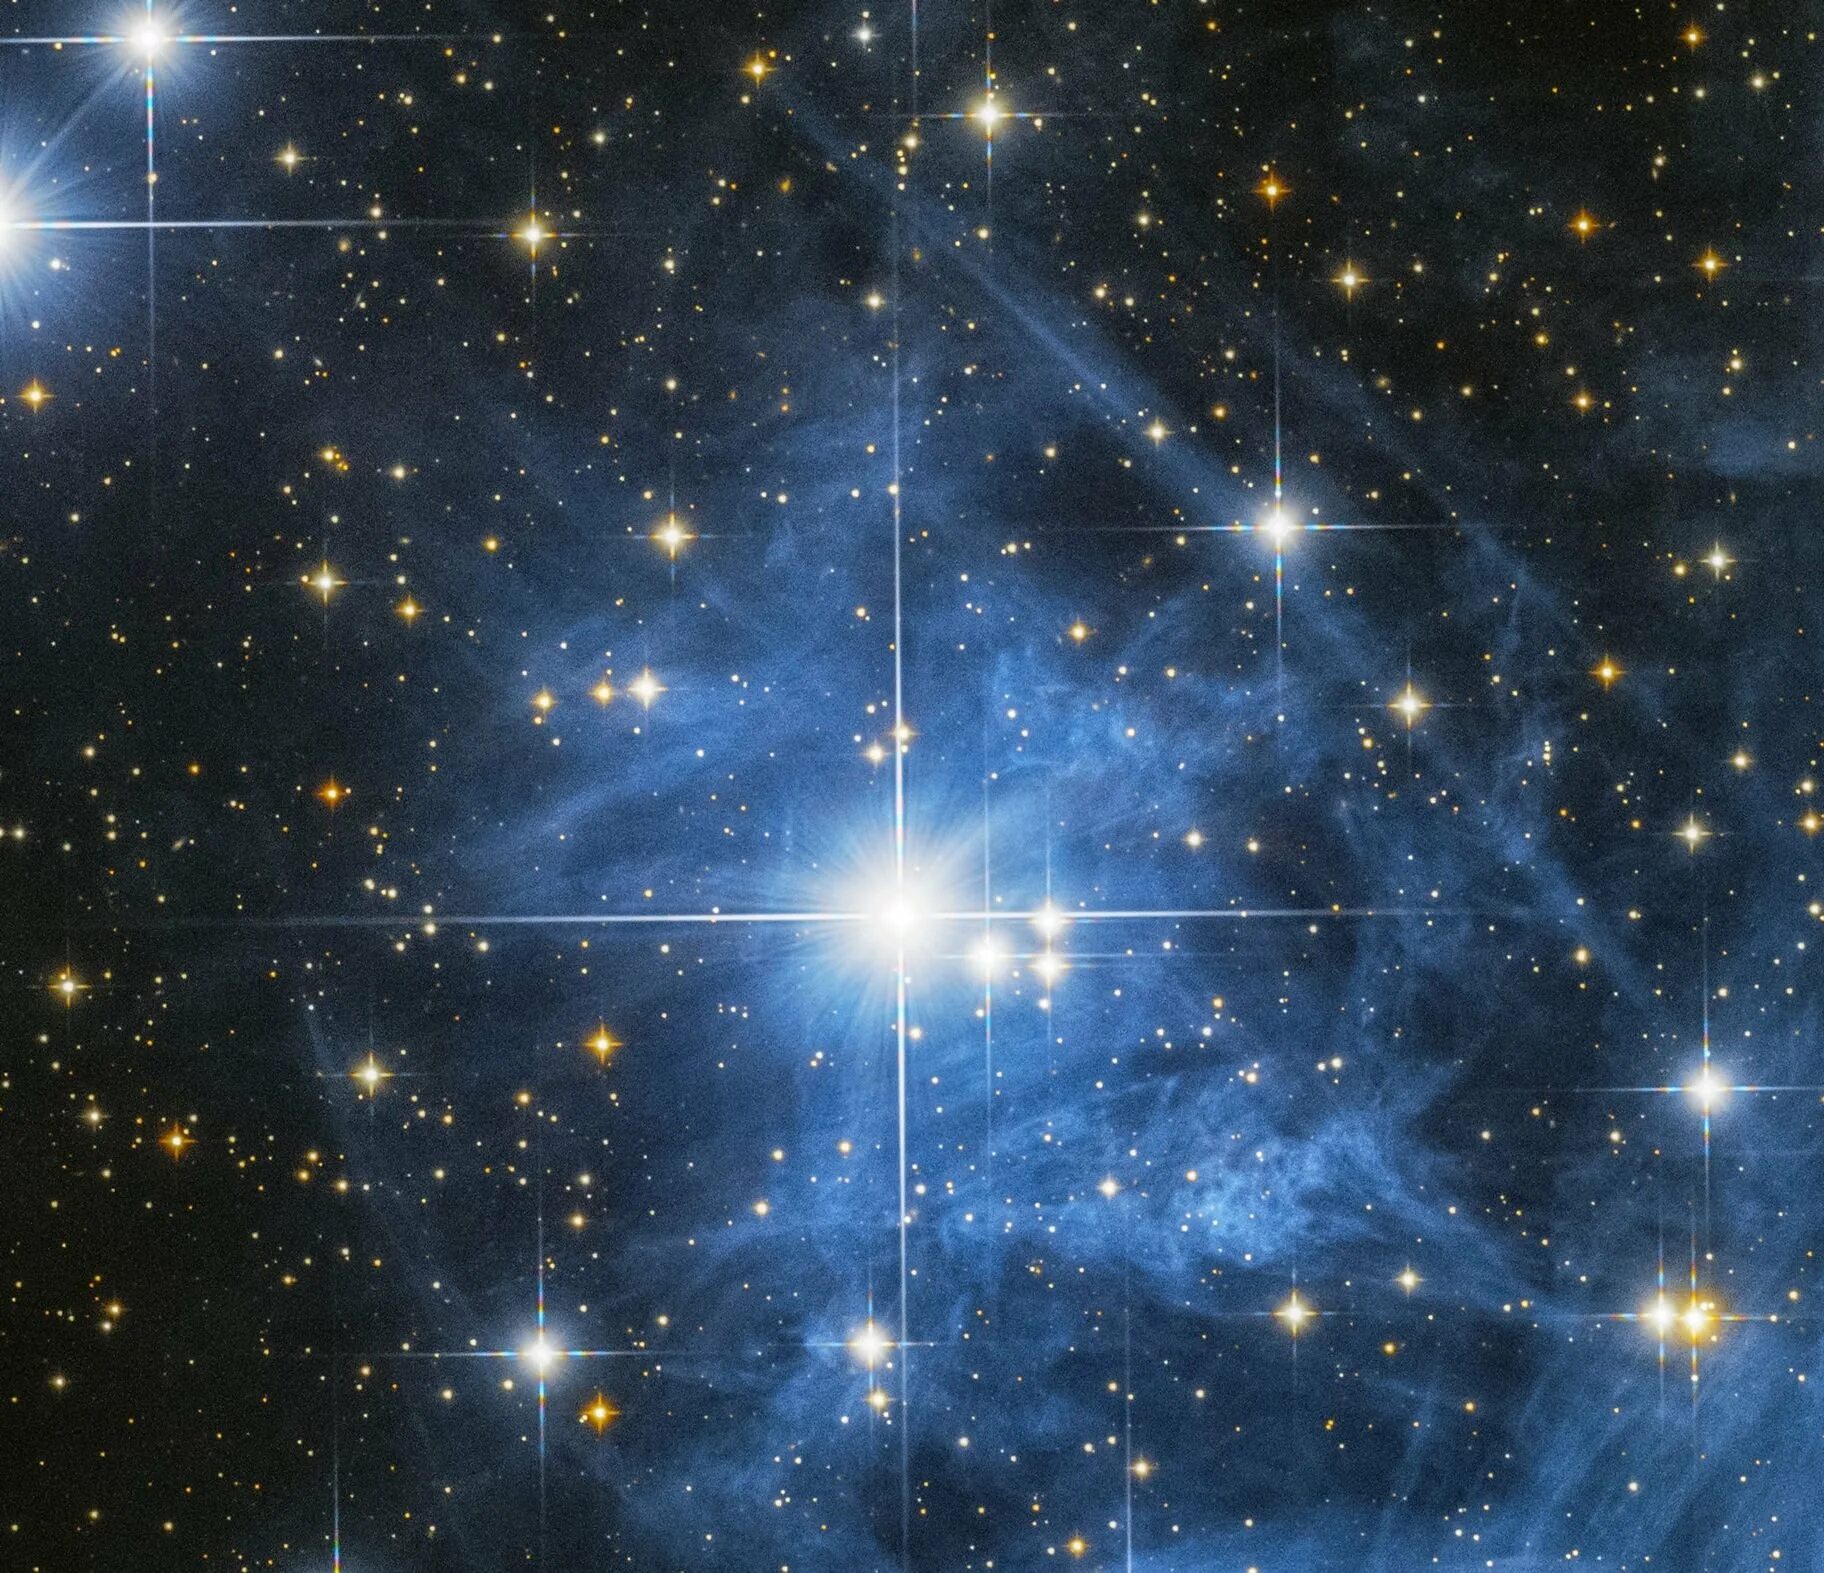 Альцион Созвездие плед. Созвездие Плеяд Альциона. Галактика Плеяды. Звезда Альциона созвездия Плеяд. Что такое плеяды в астрономии